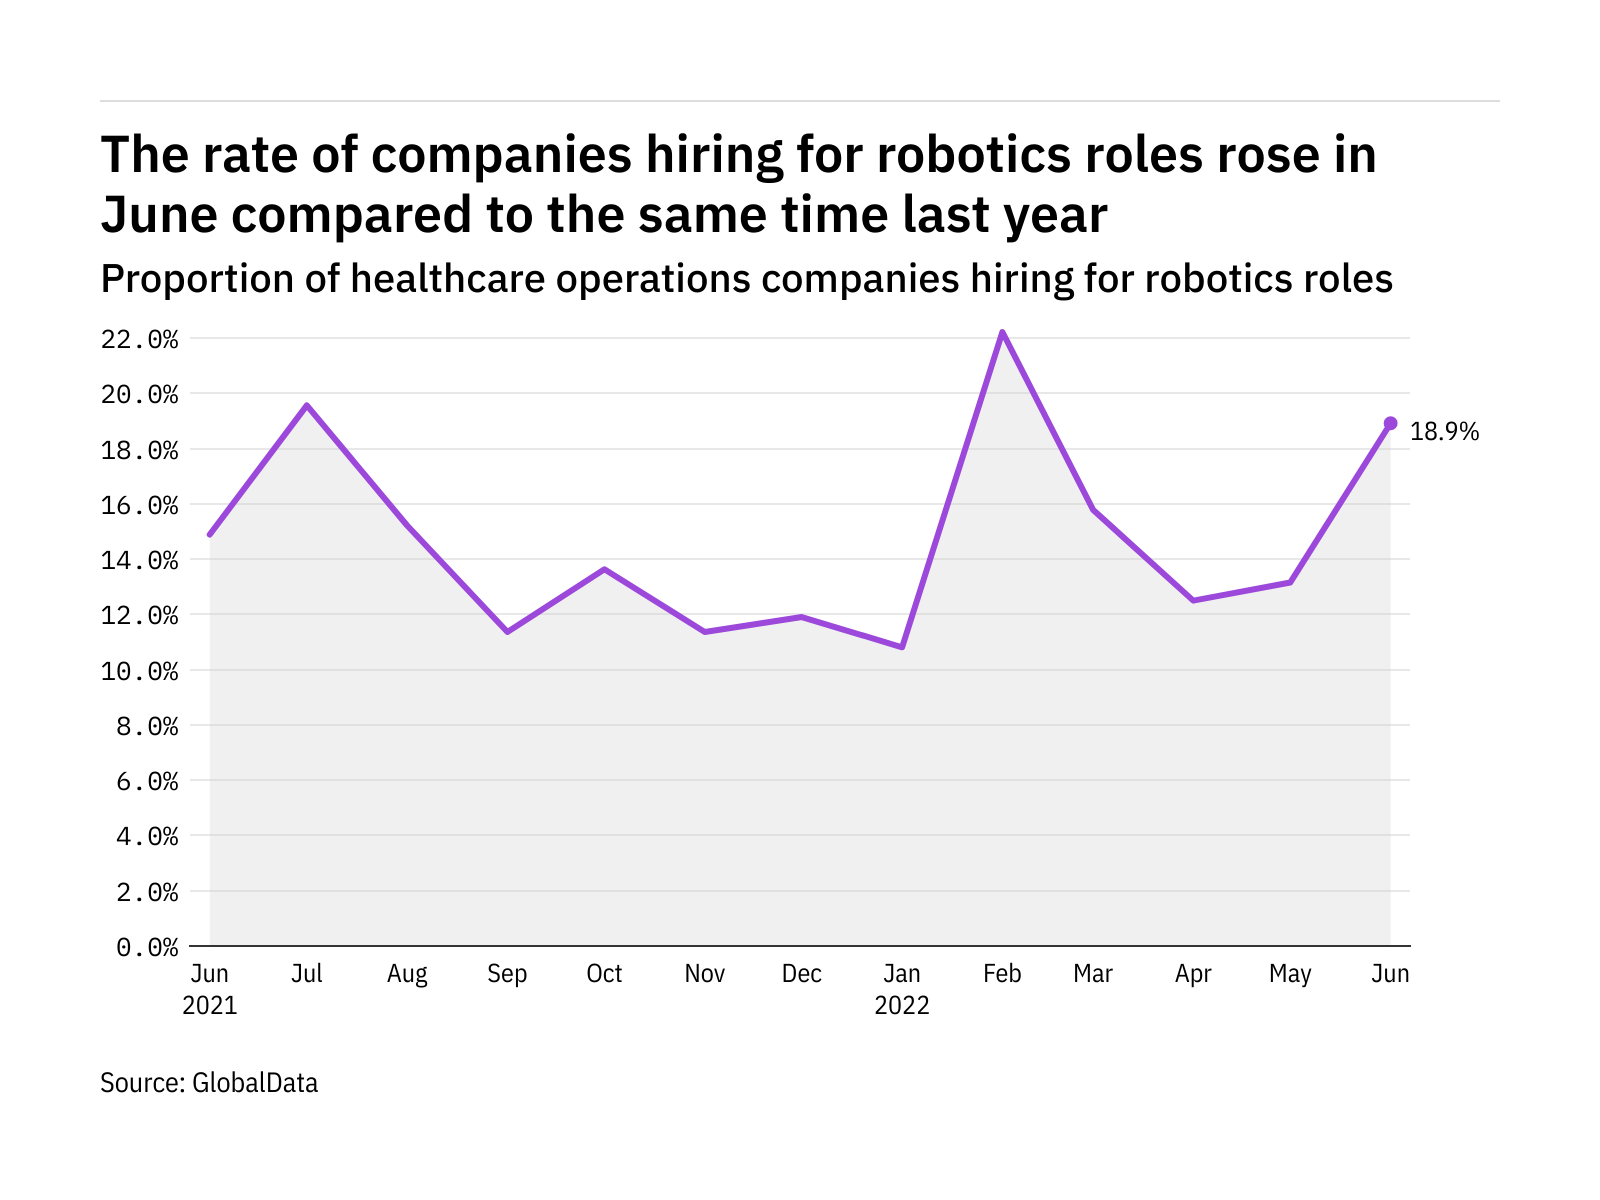 Robotics hiring levels in the healthcare industry rose in June 2022